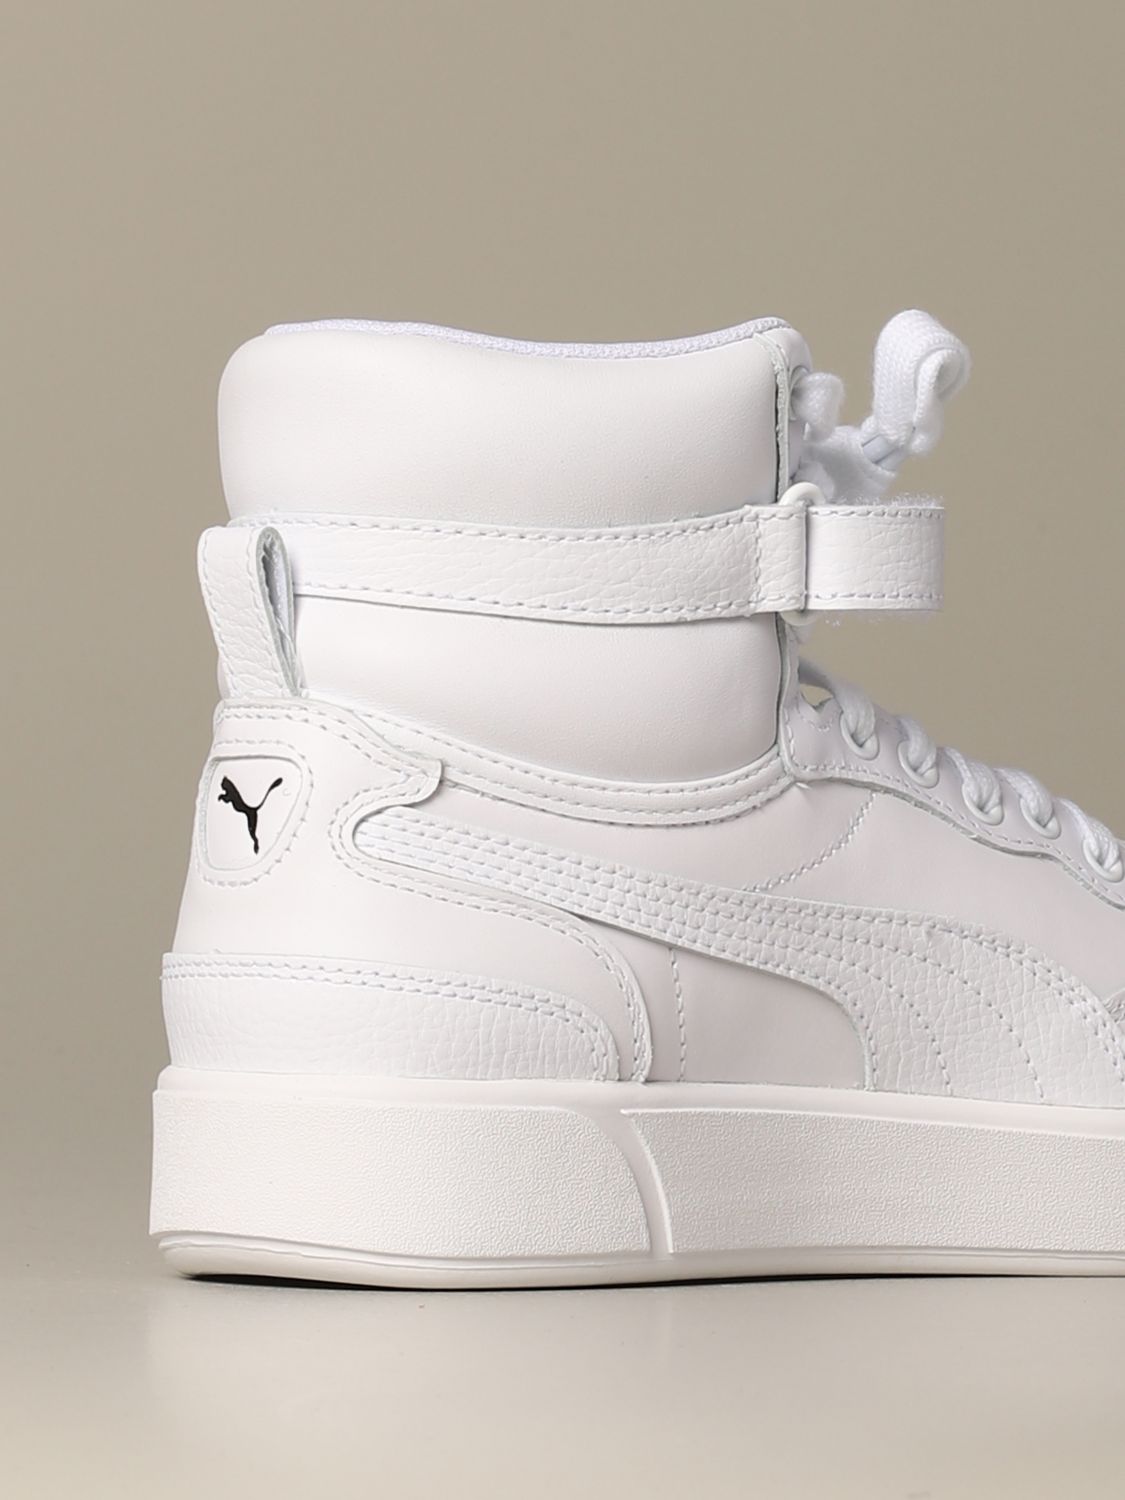 puma white shoes for ladies